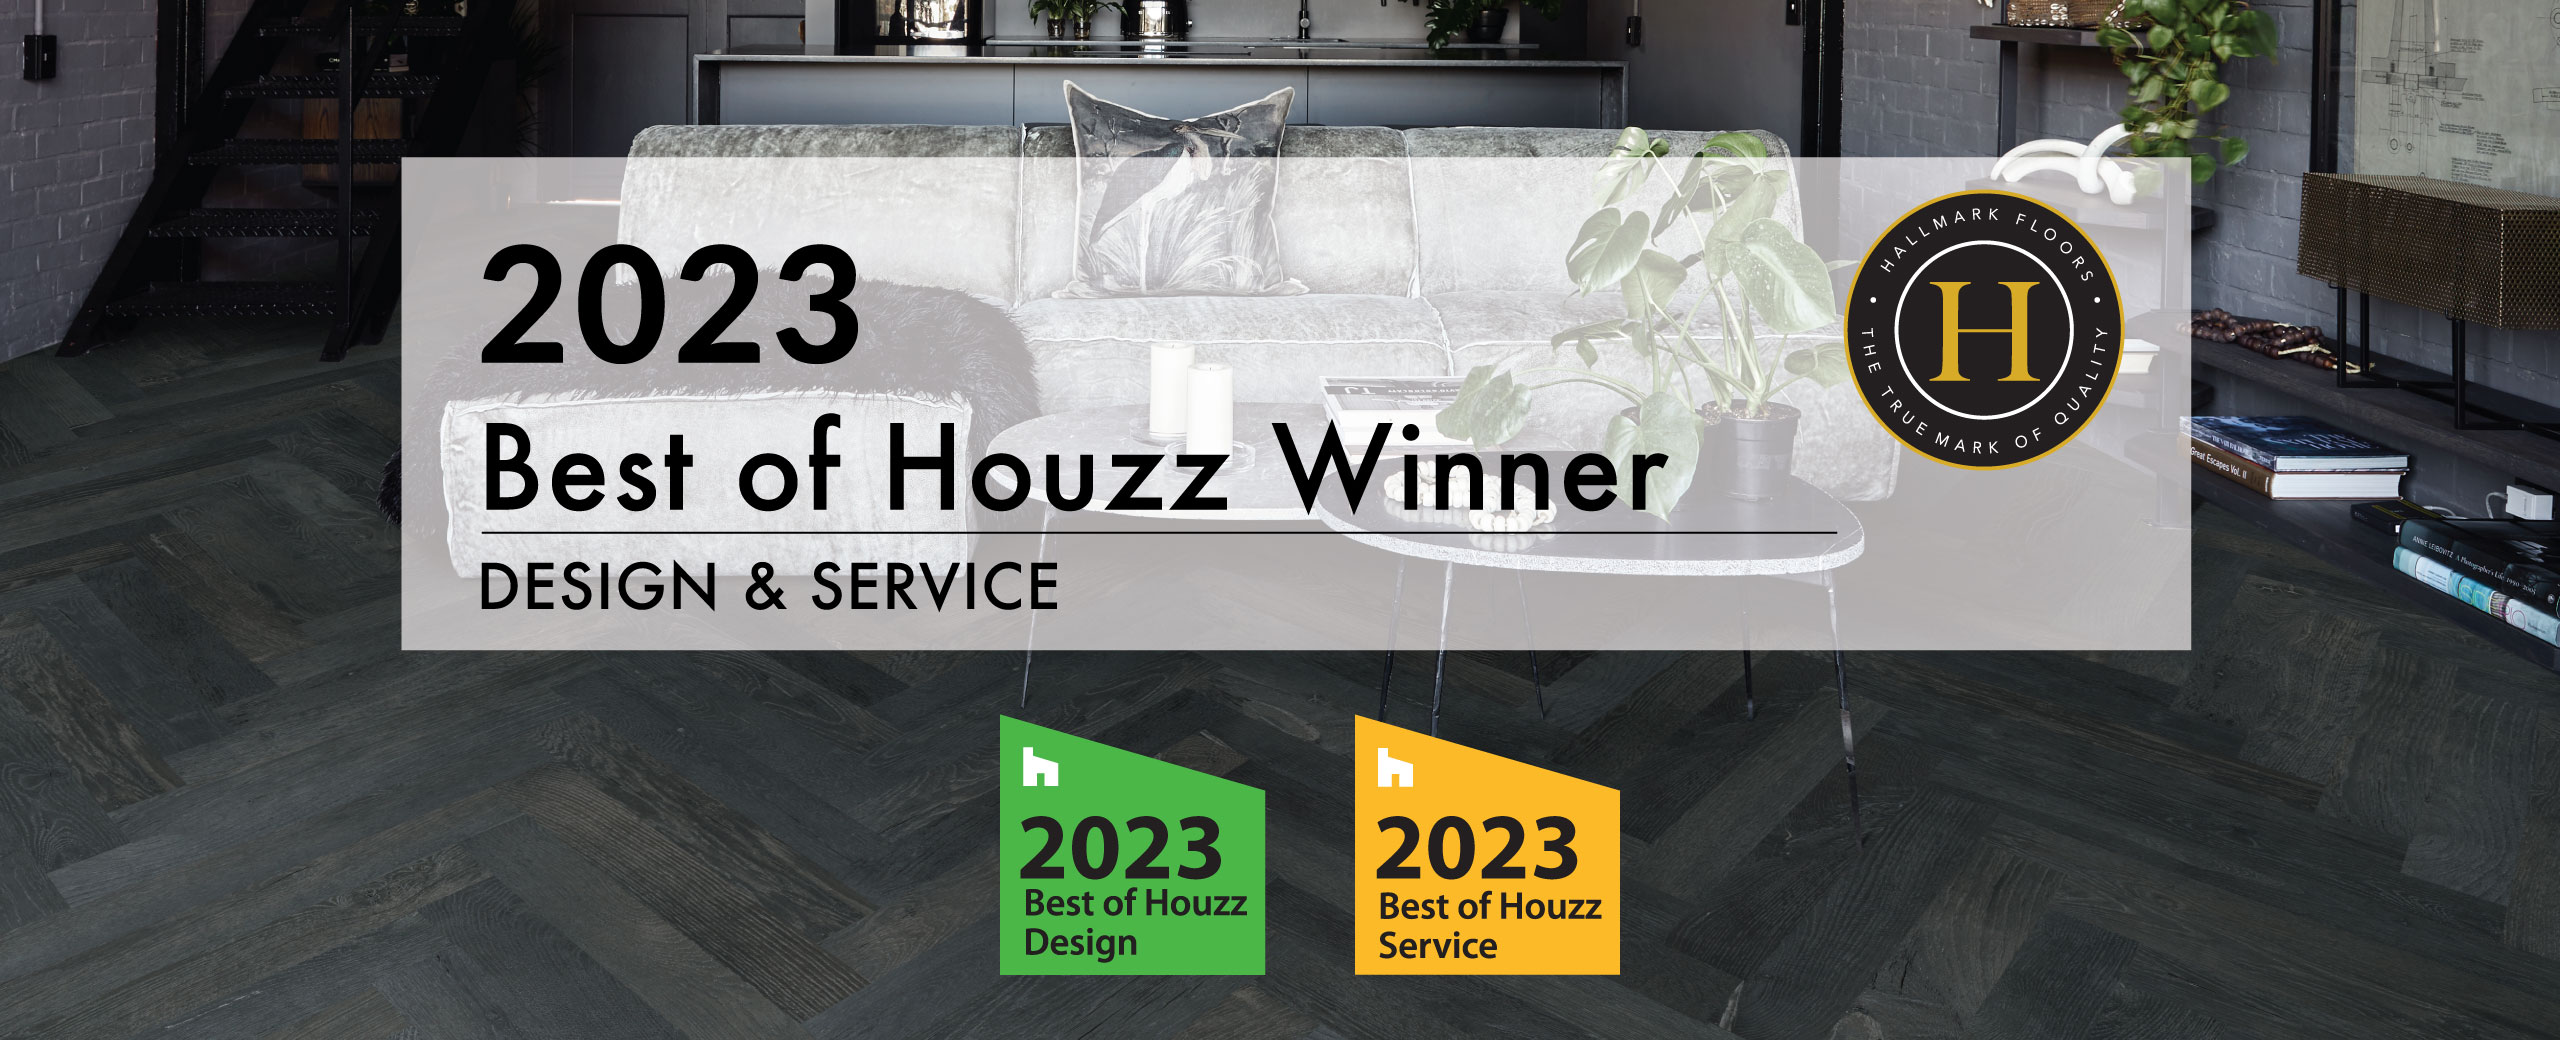 Hallmark Floors wins best of houzz 2023 in design and service